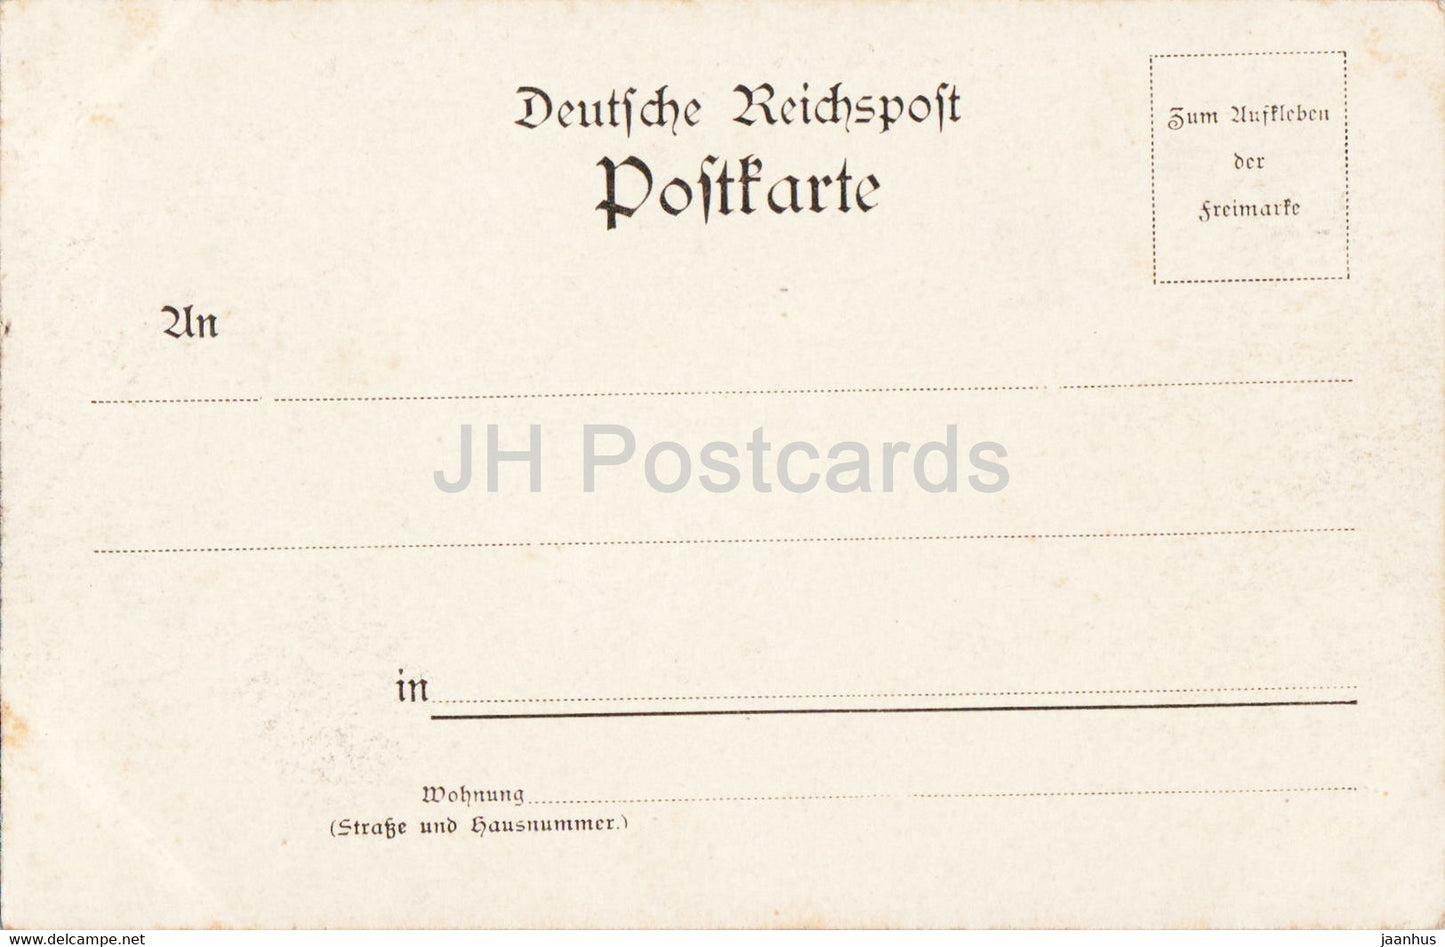 Berlin - Friedrichsbrucke u Borse - bridge - tram - 587 - old postcard - Germany - unused